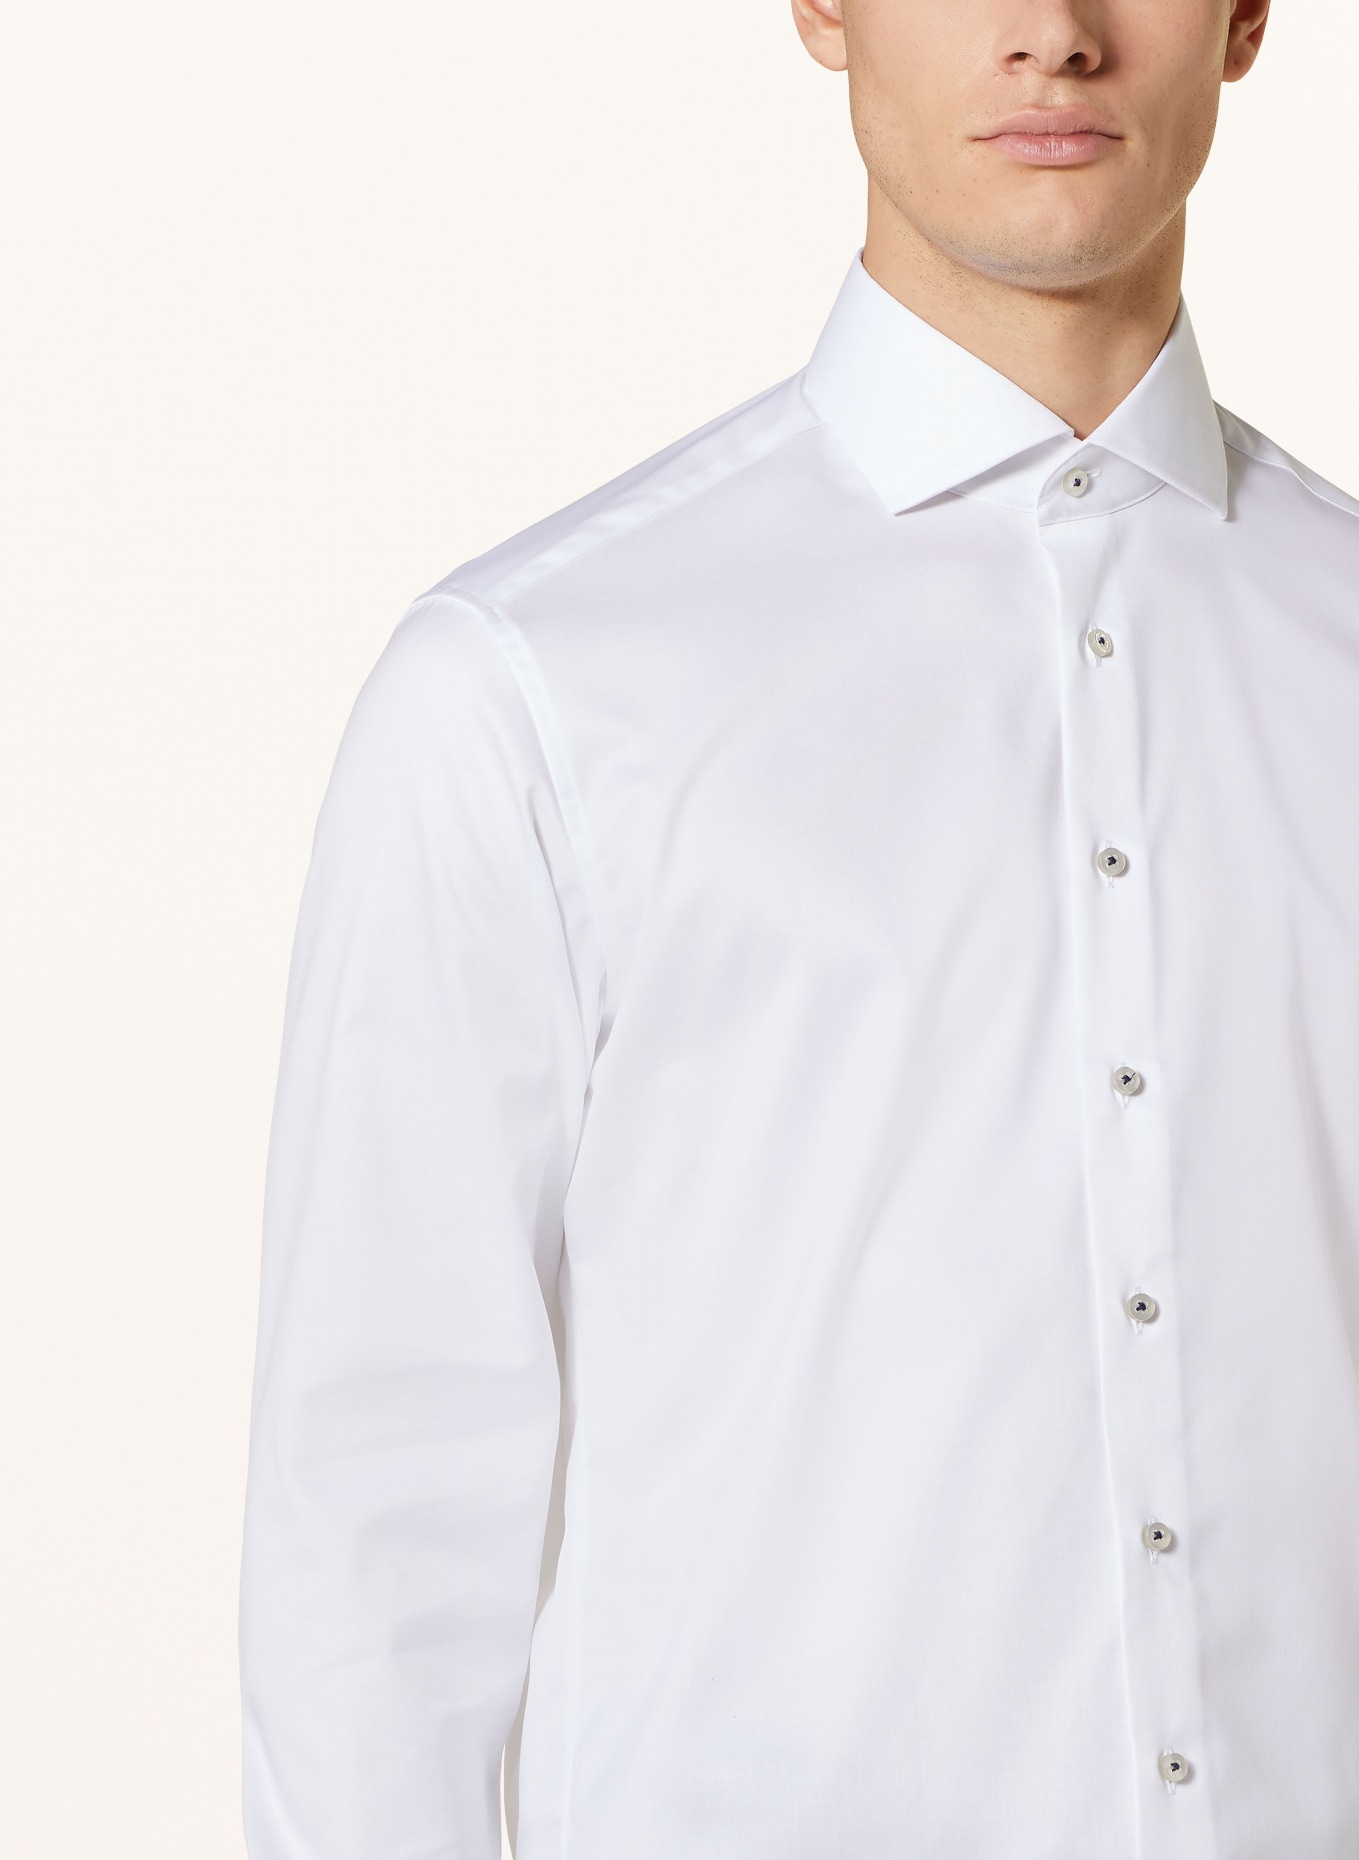 Shirt 1863 white ETERNA fit modern in